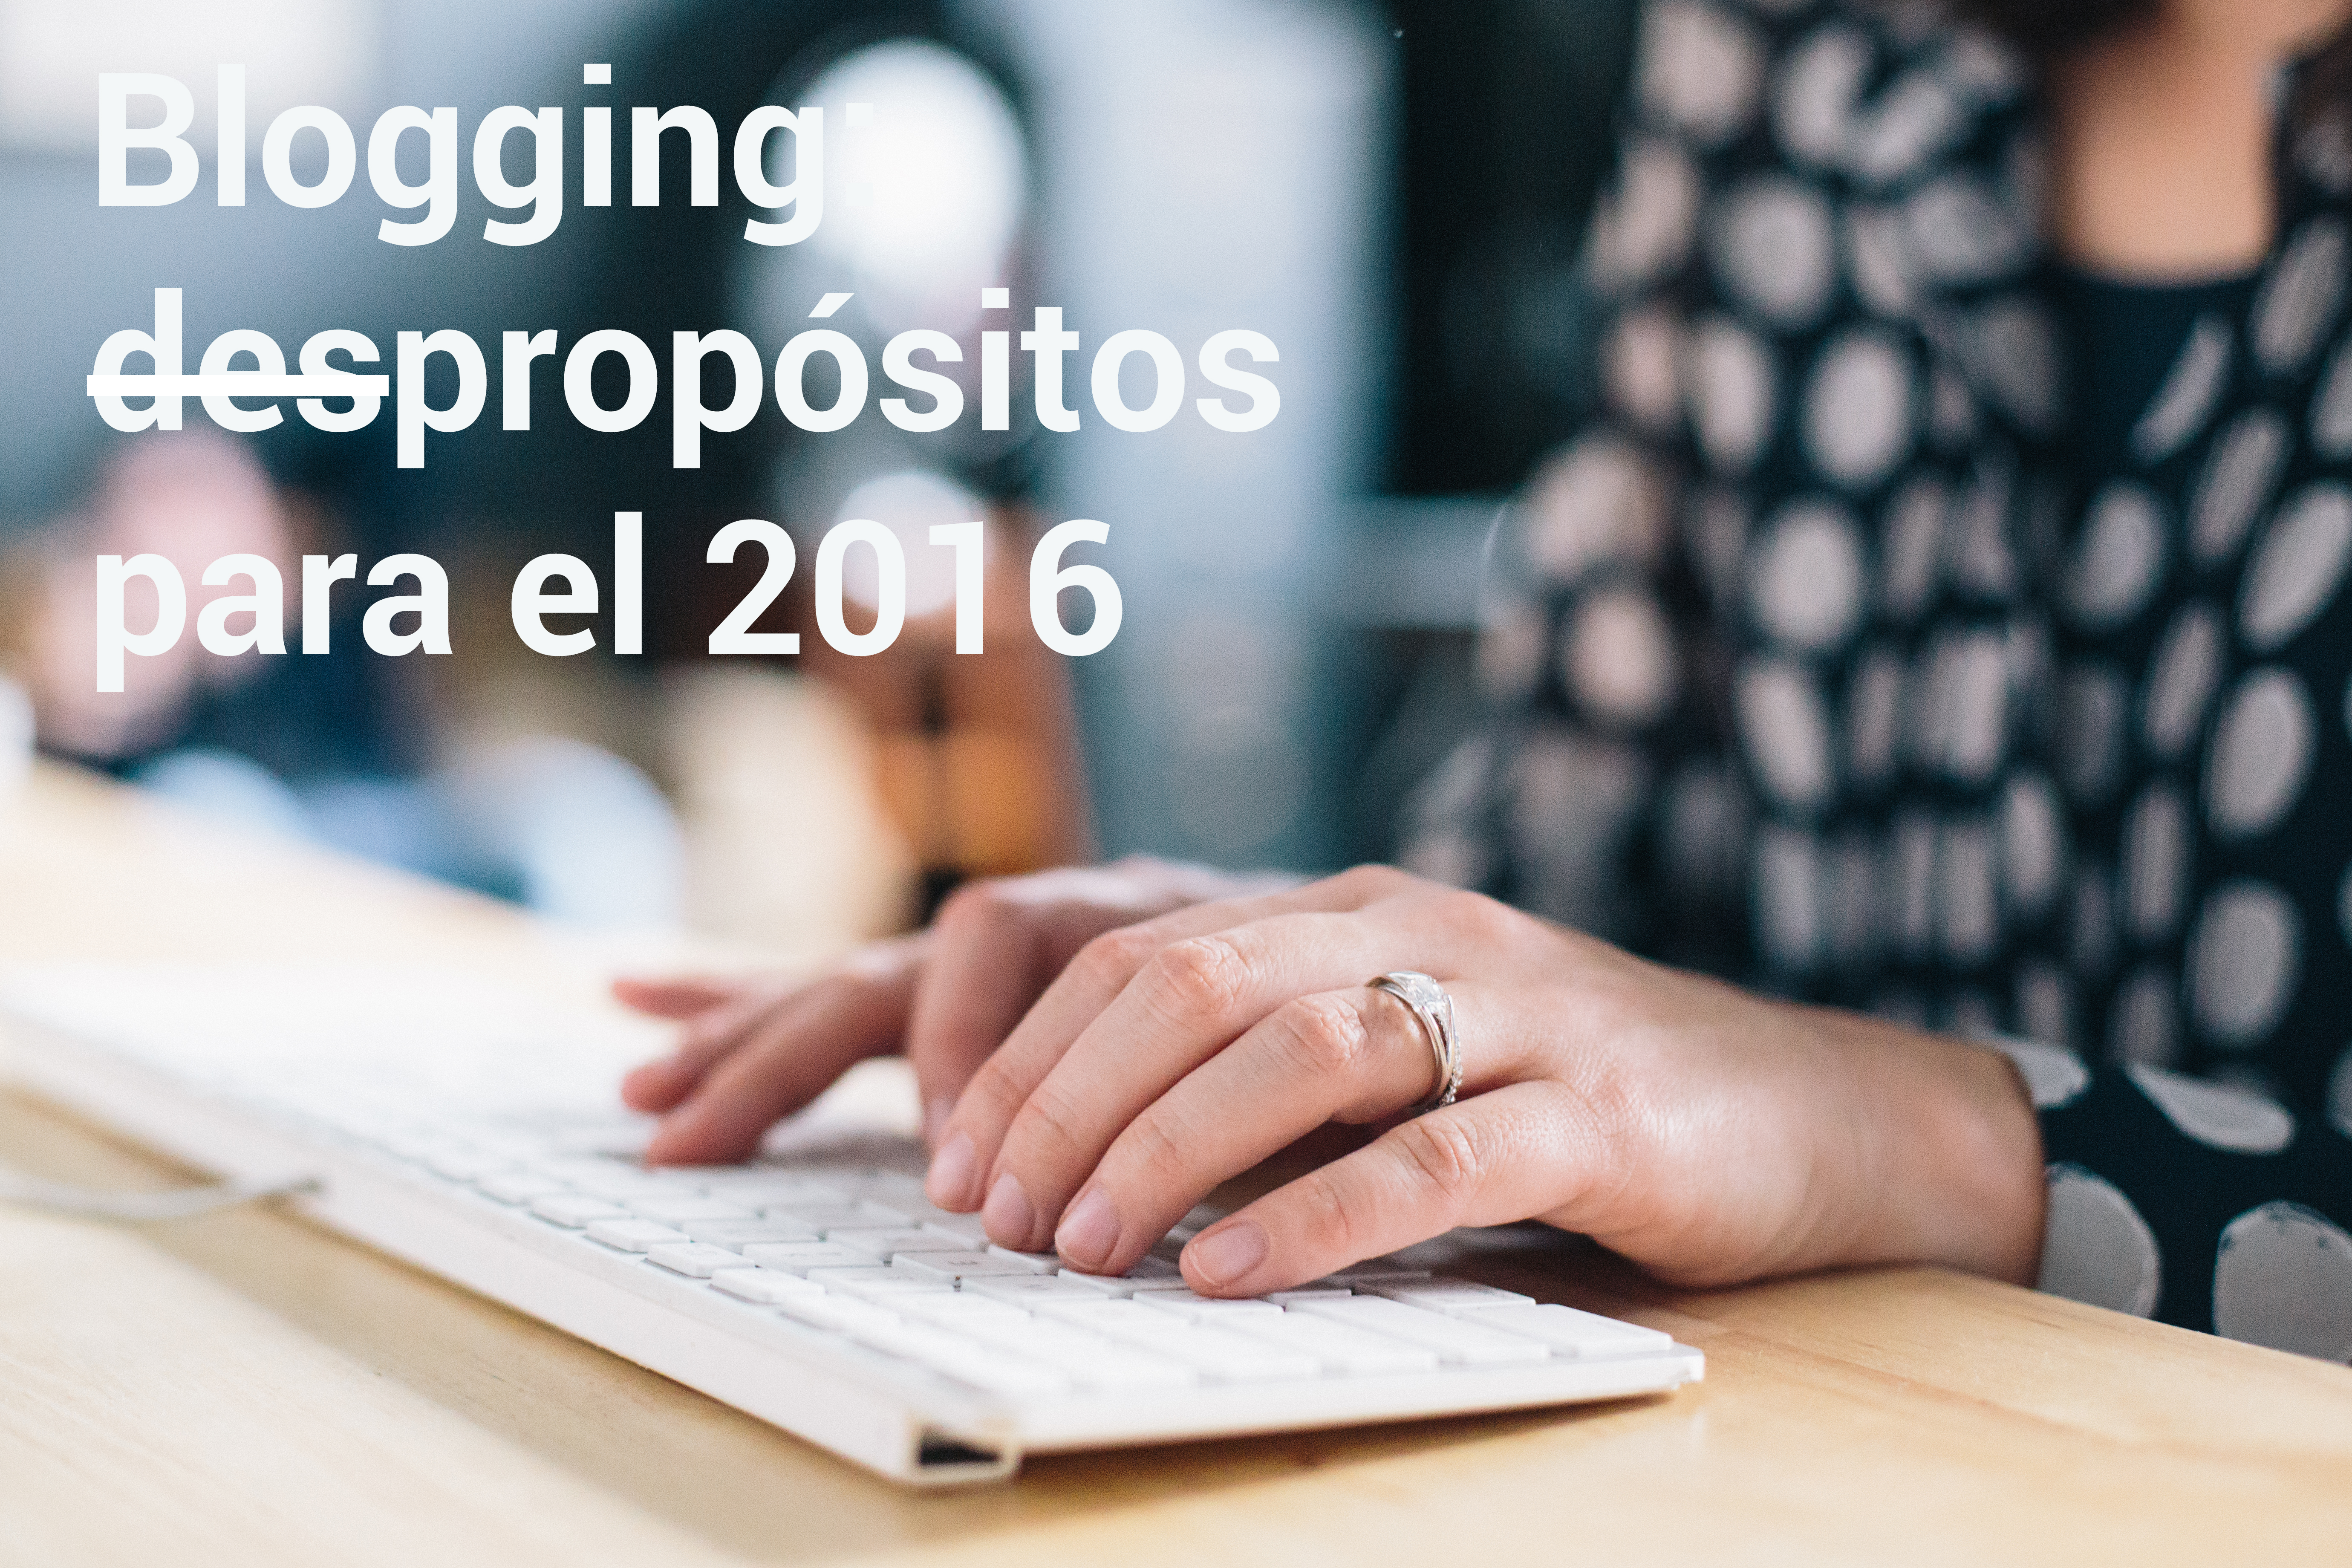 propositos-2016-blogging